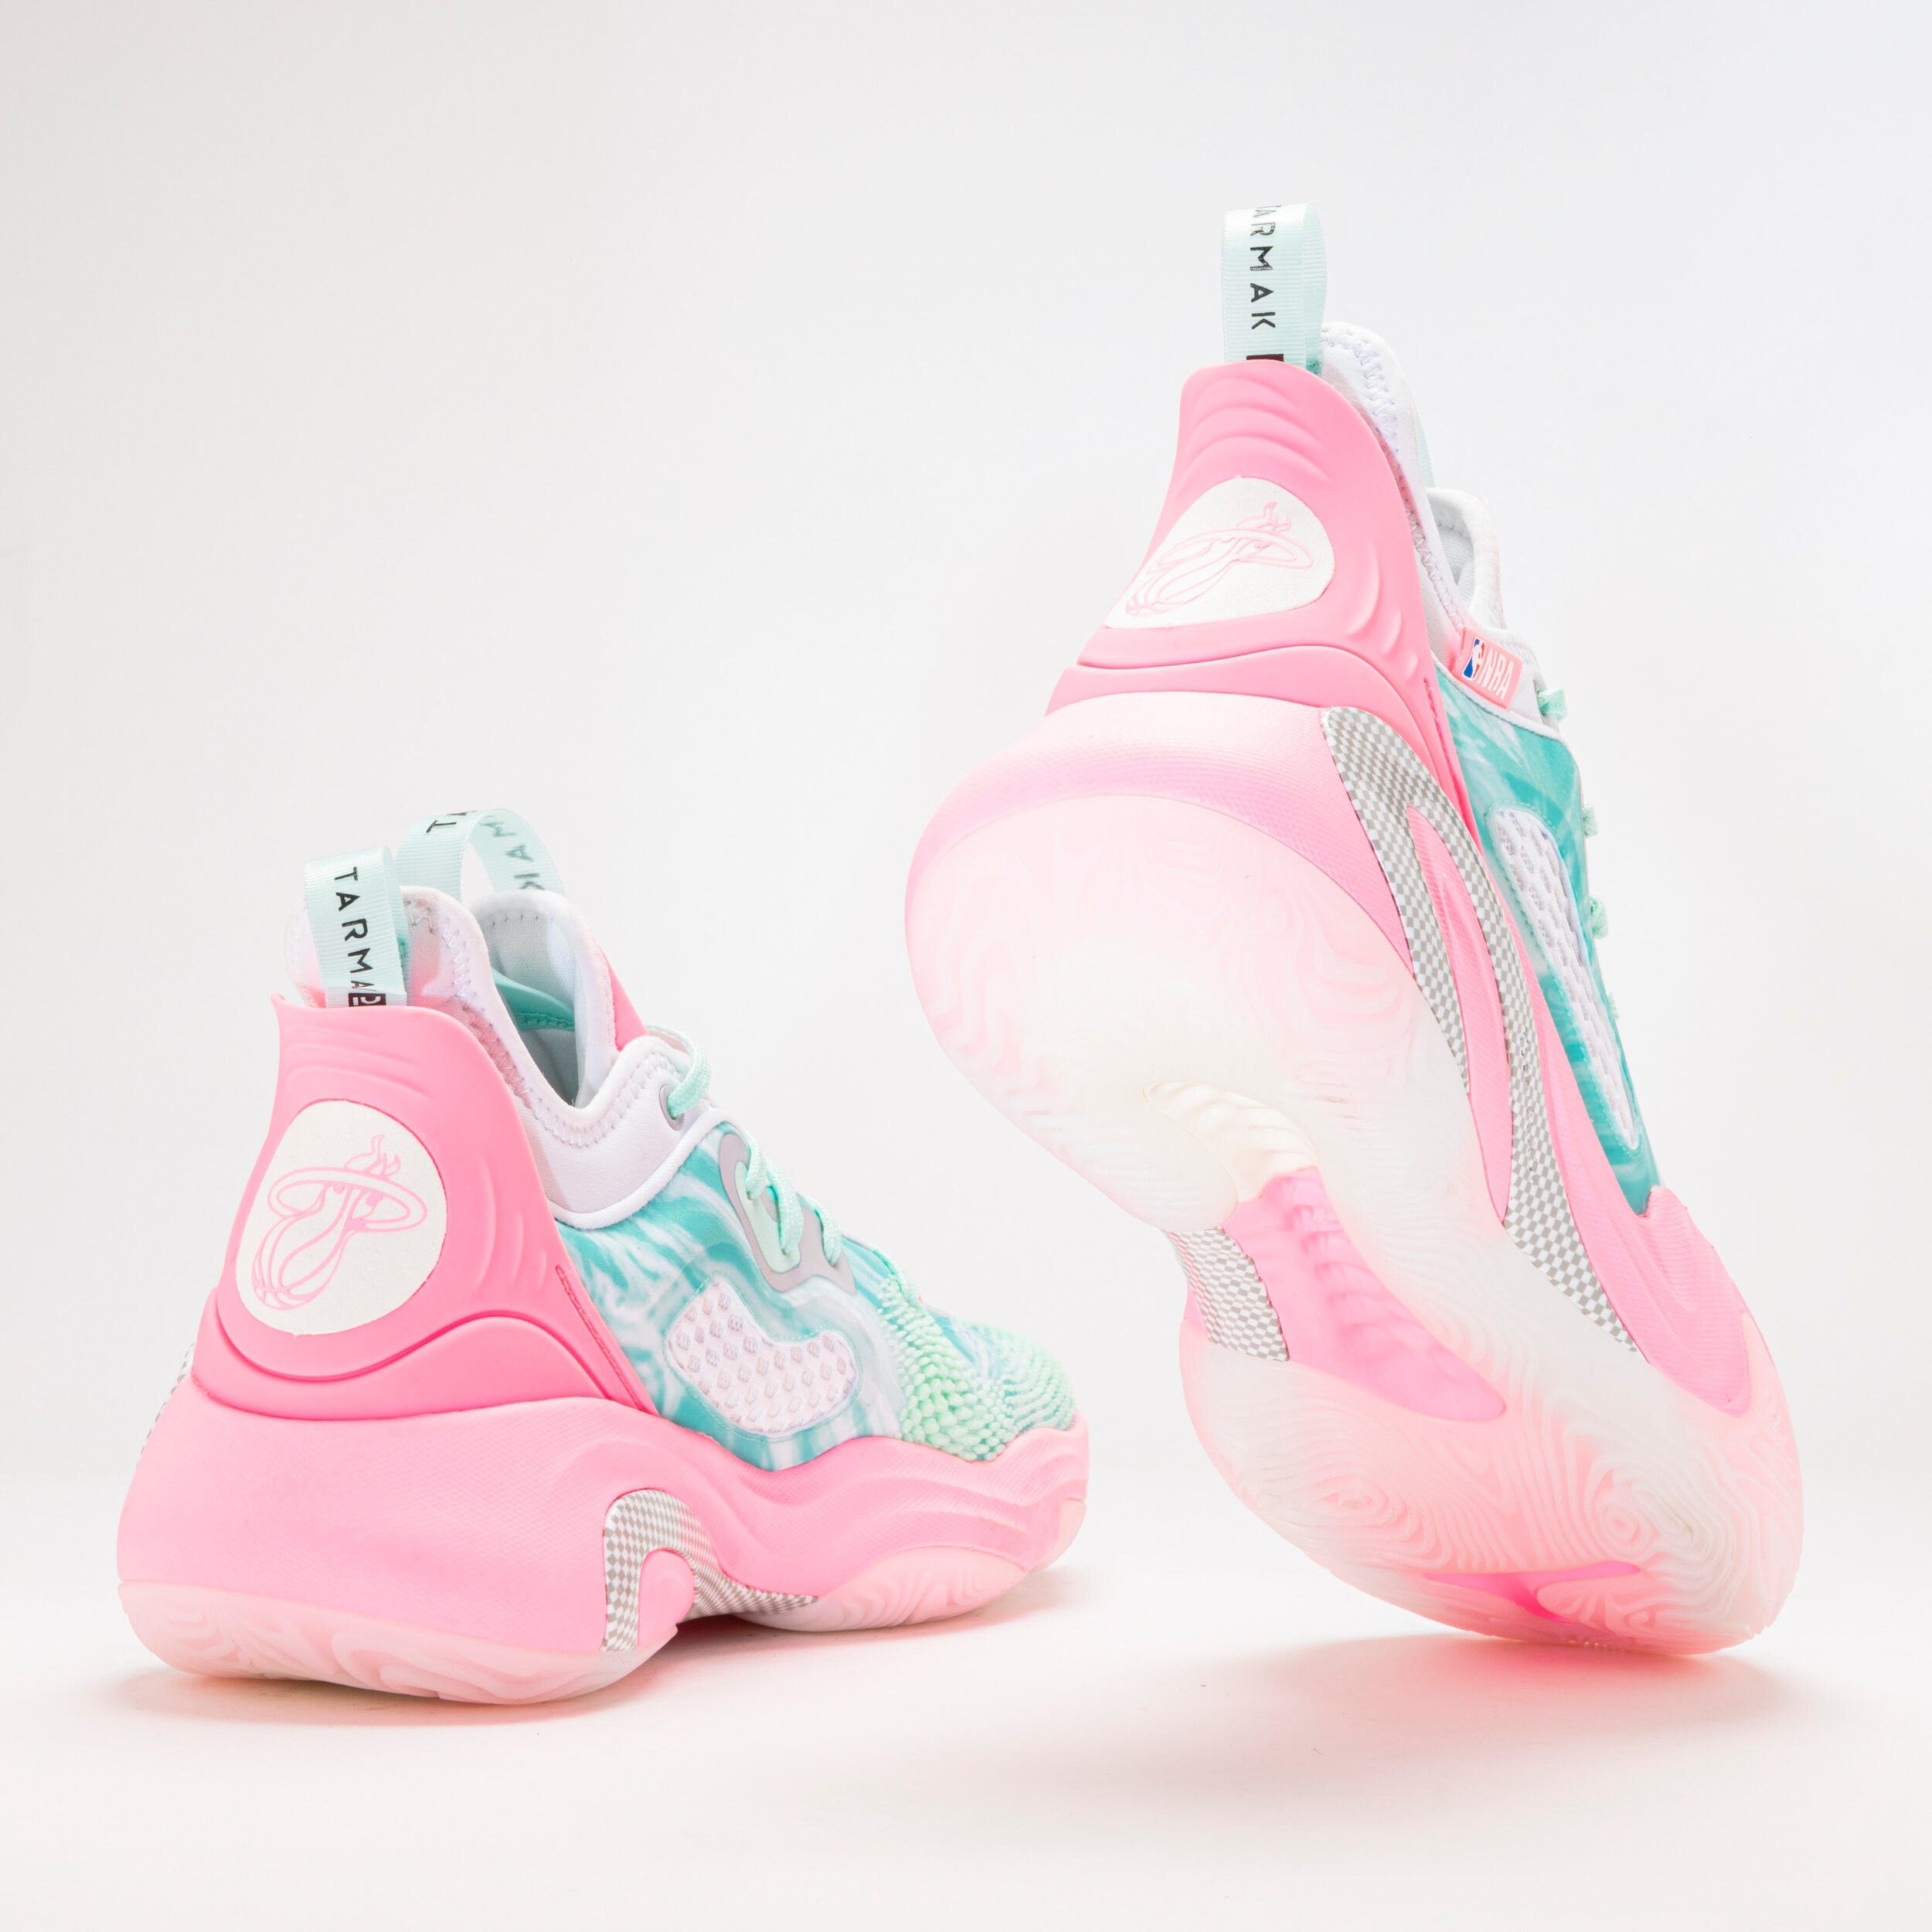 Men's/Women's Basketball Shoes SE900 - NBA Miami Heat/Green/Pink 3/9